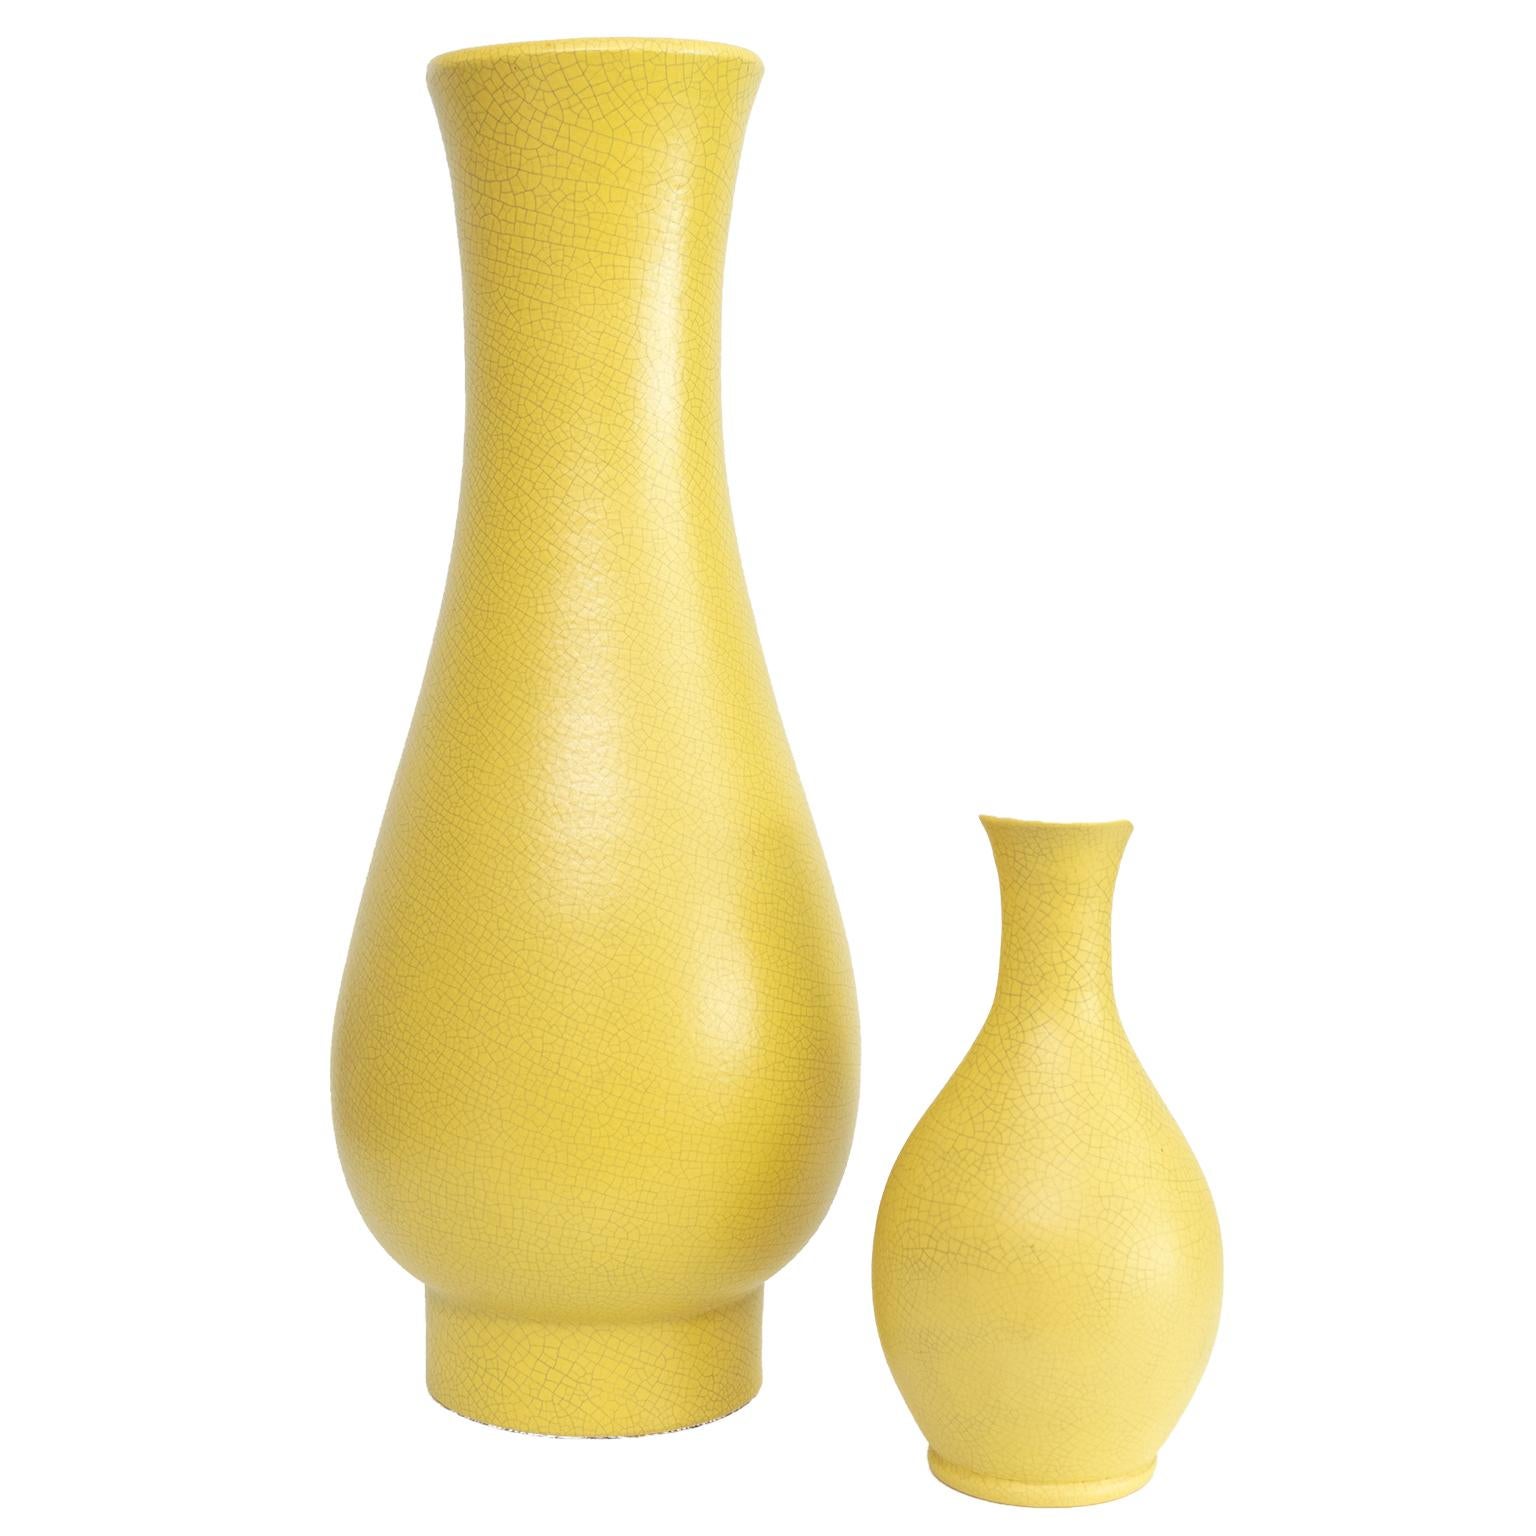 Swedish Art Deco Ceramic Vases in Yellow Crackle Glaze by Artist Ewald Dahlskog